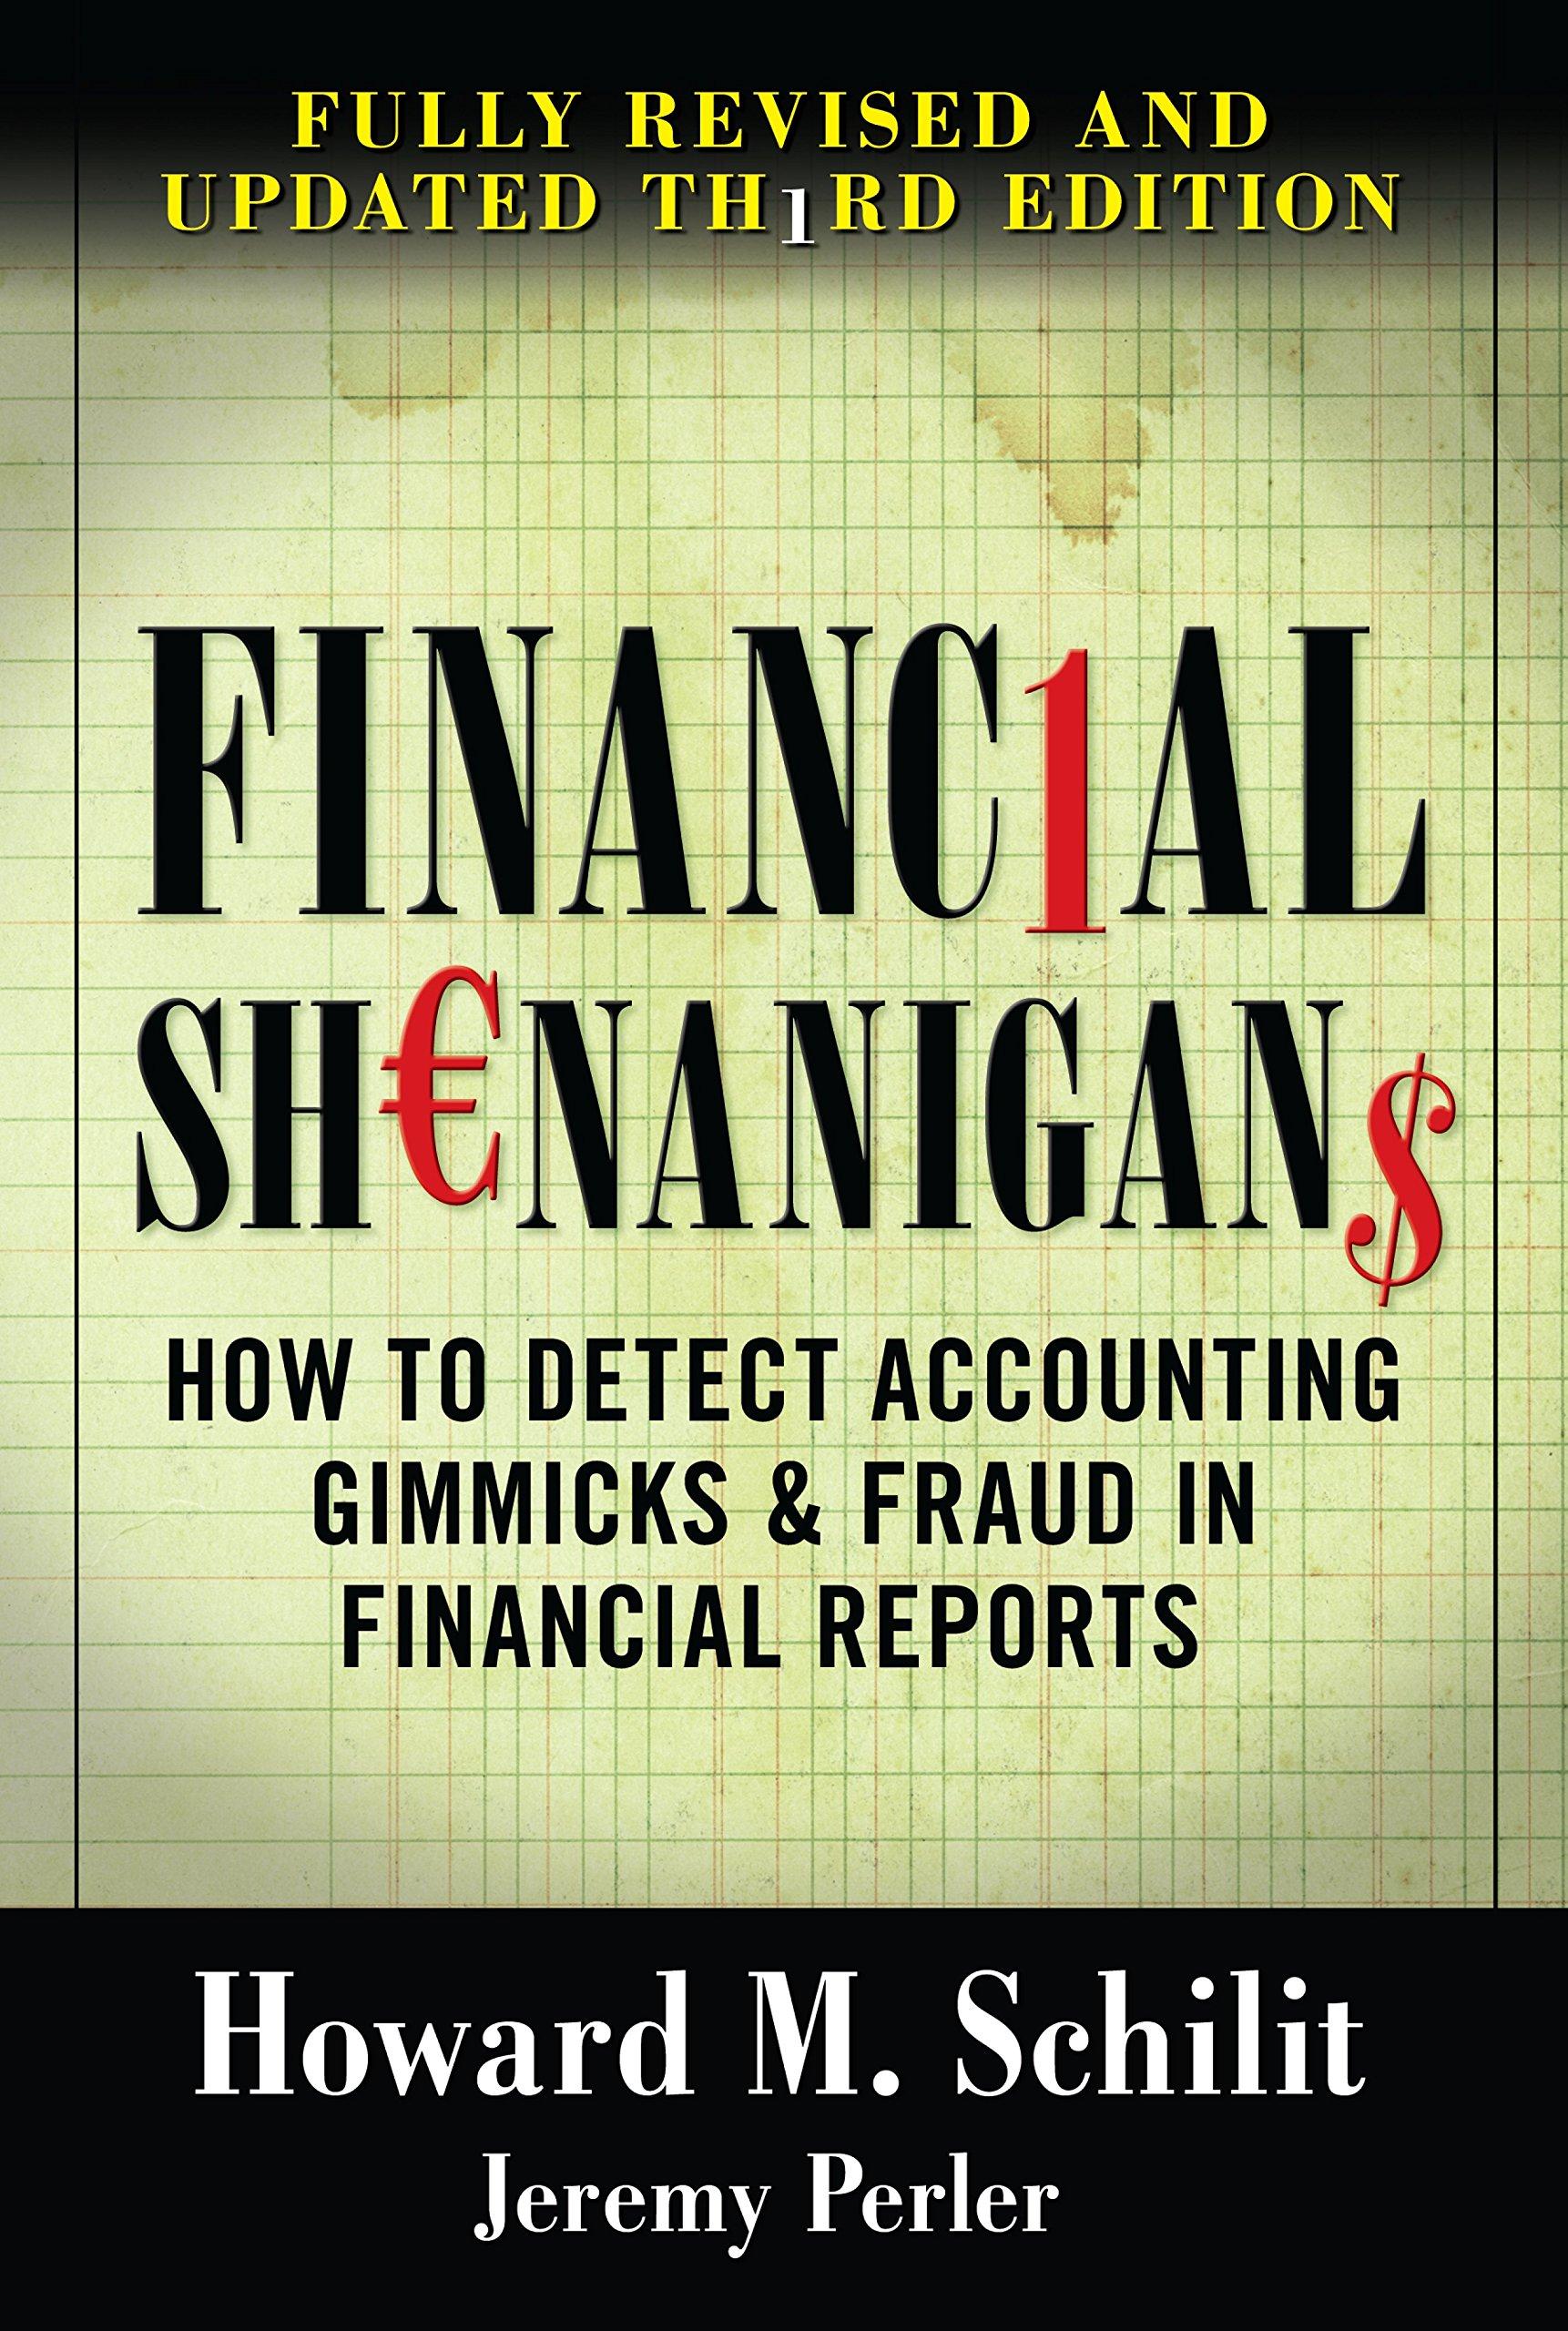 financial shenanigans 3rd edition howard schilit, jeremy perler 0071703071, 978-0071703079